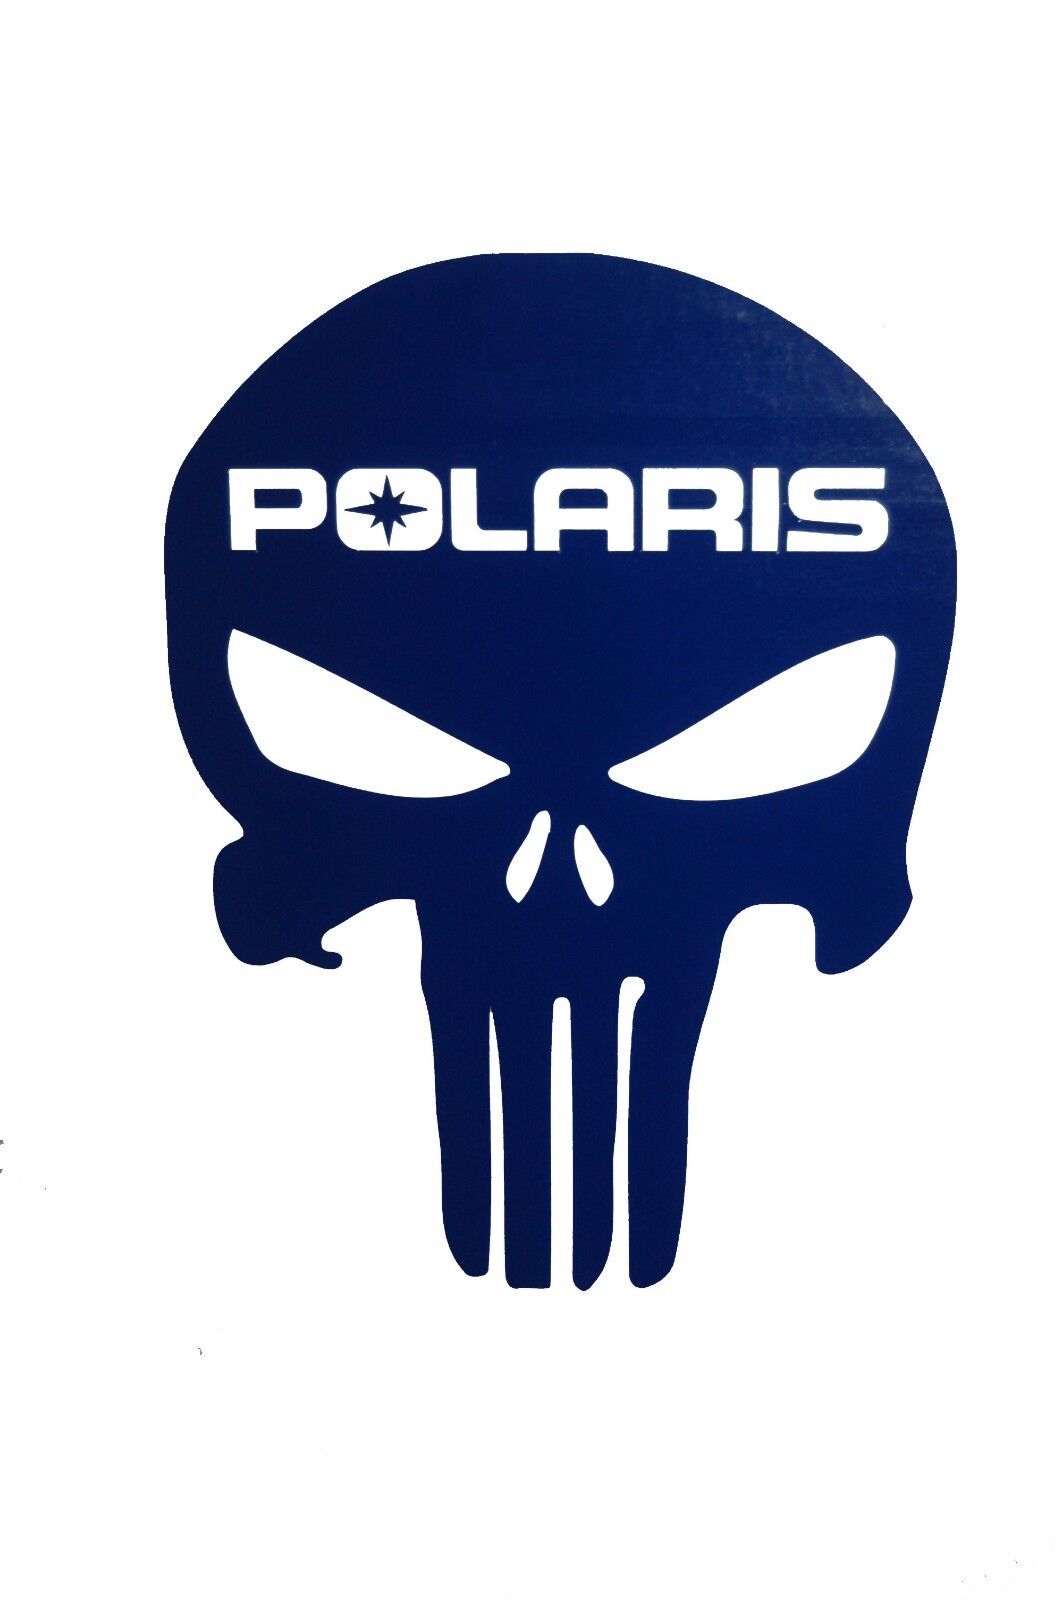 Punisher Polaris Skull Jet Ski ATV Slingshot Vinyl Decal Sticker 61111